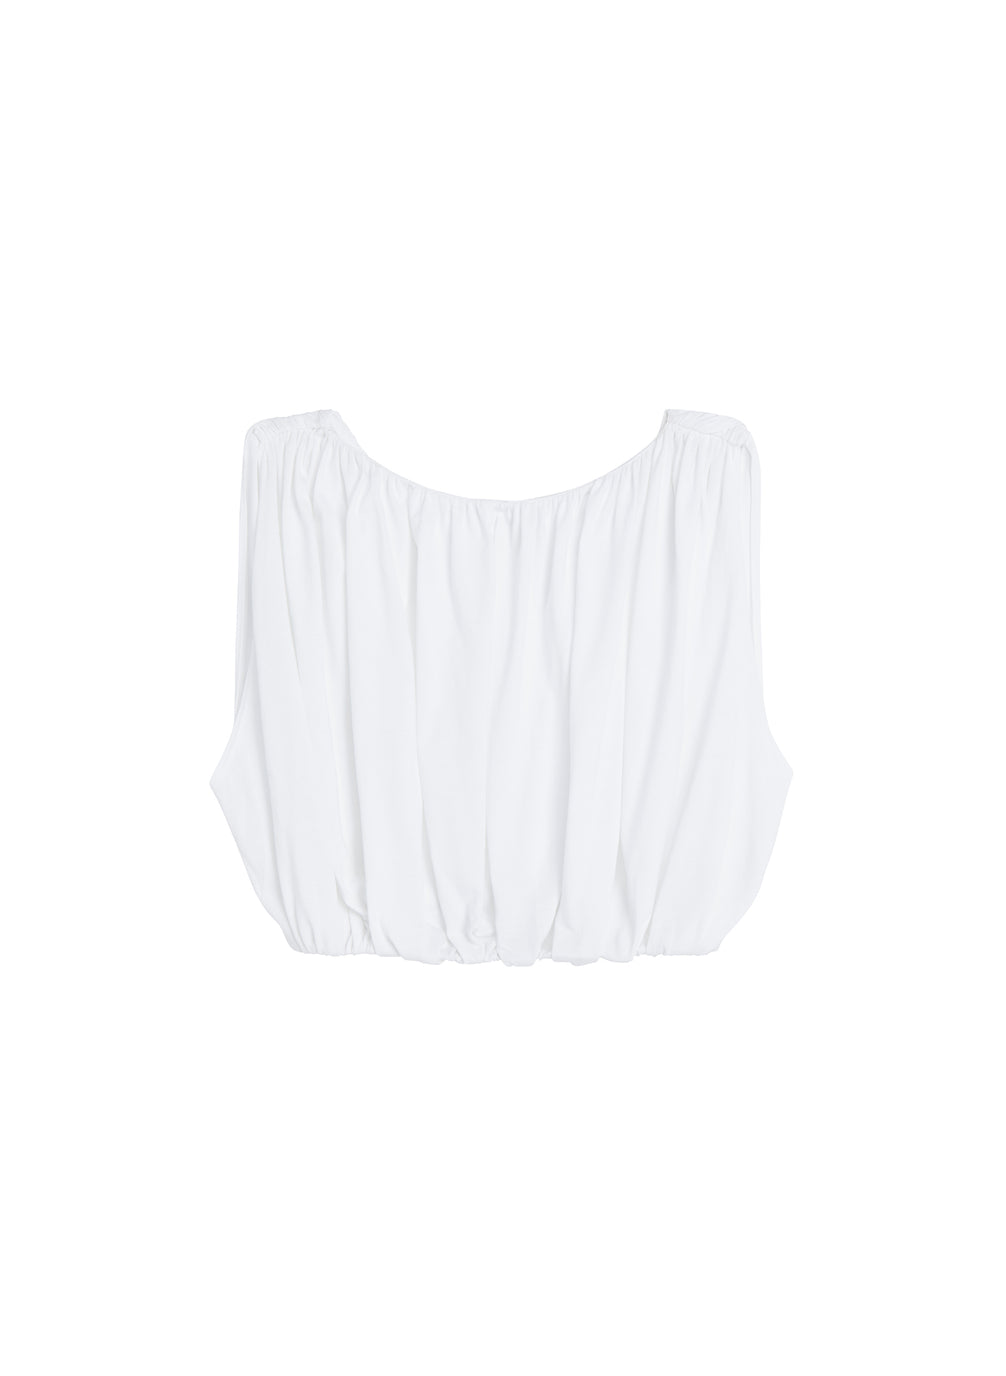 flatlay of white sleeveless cropped top